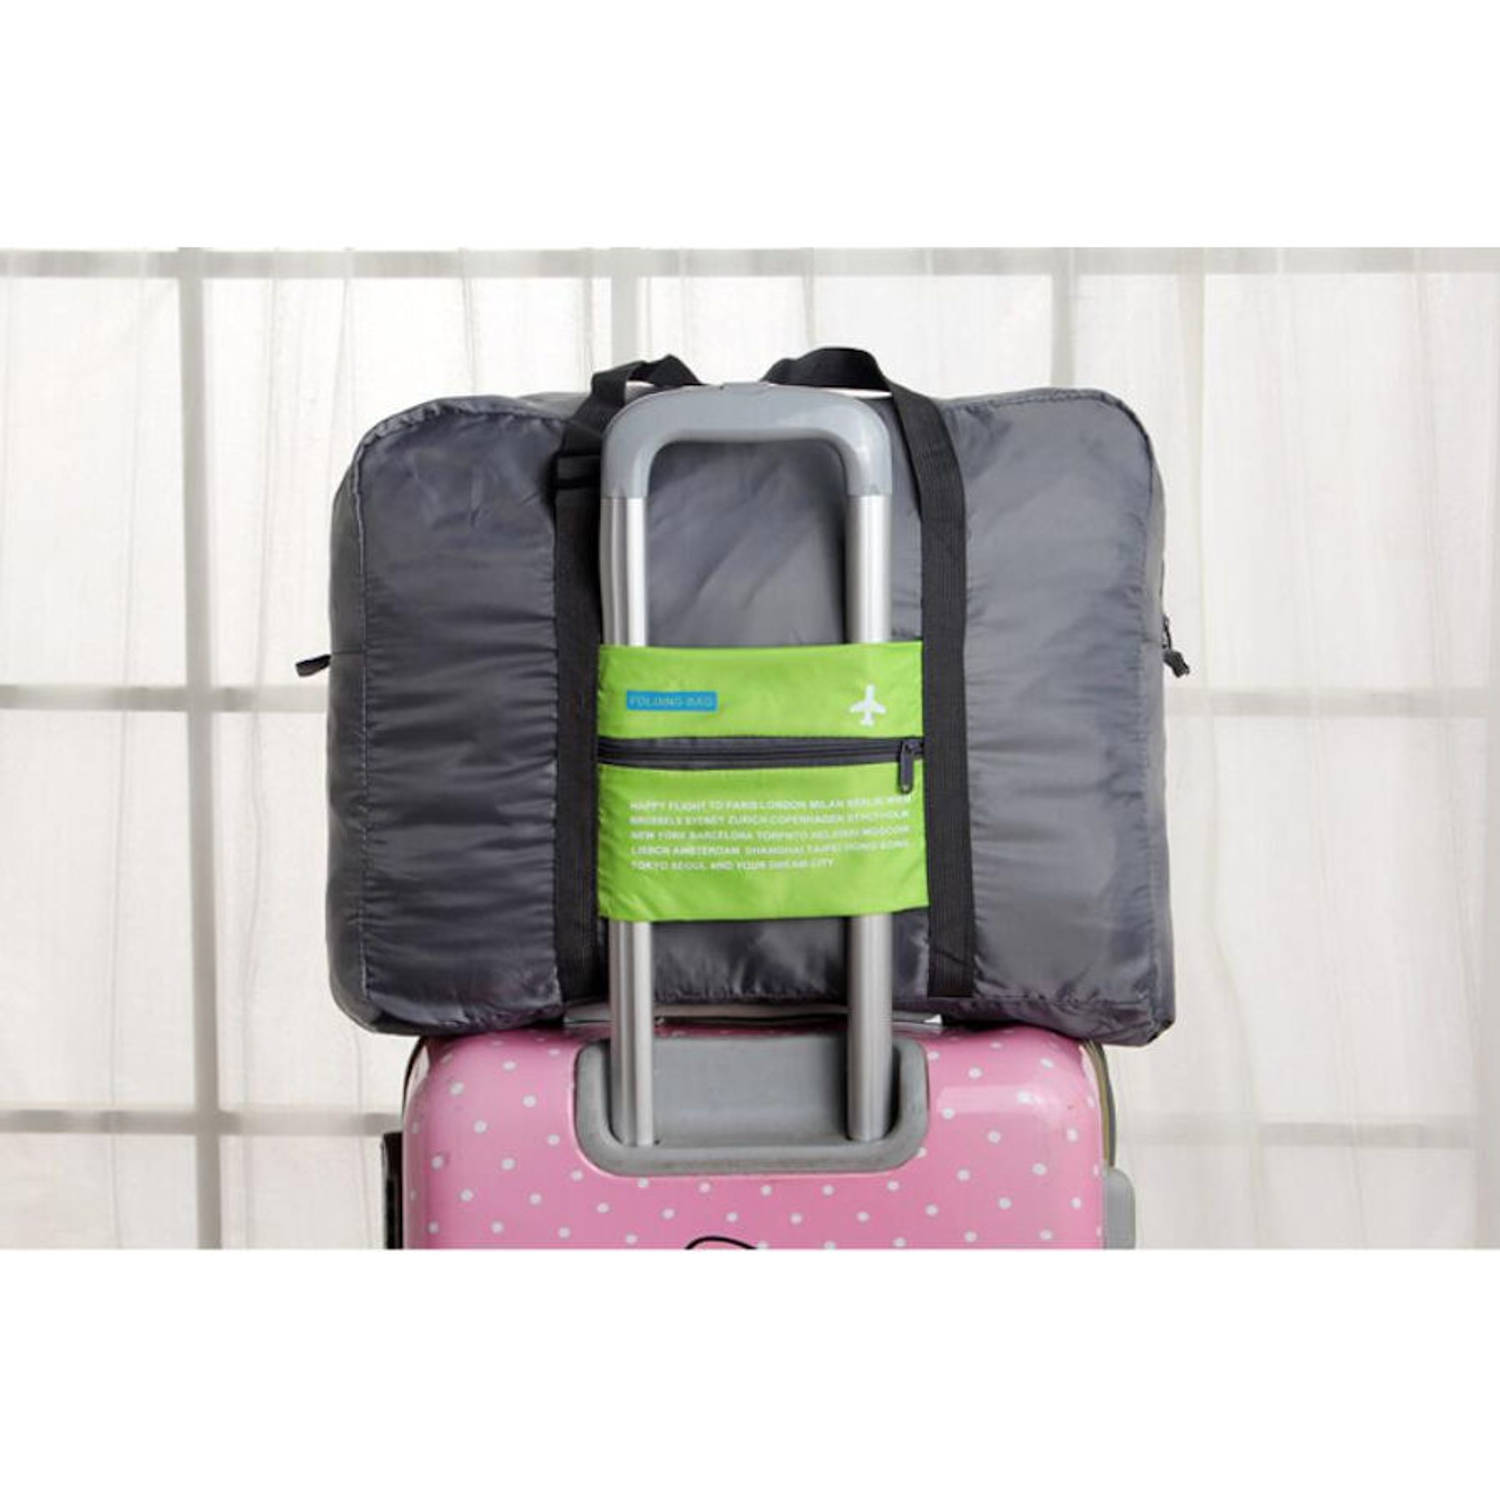 Decopatent® Reistas Flightbag Handbagage reis tas - Travelbag | Blokker